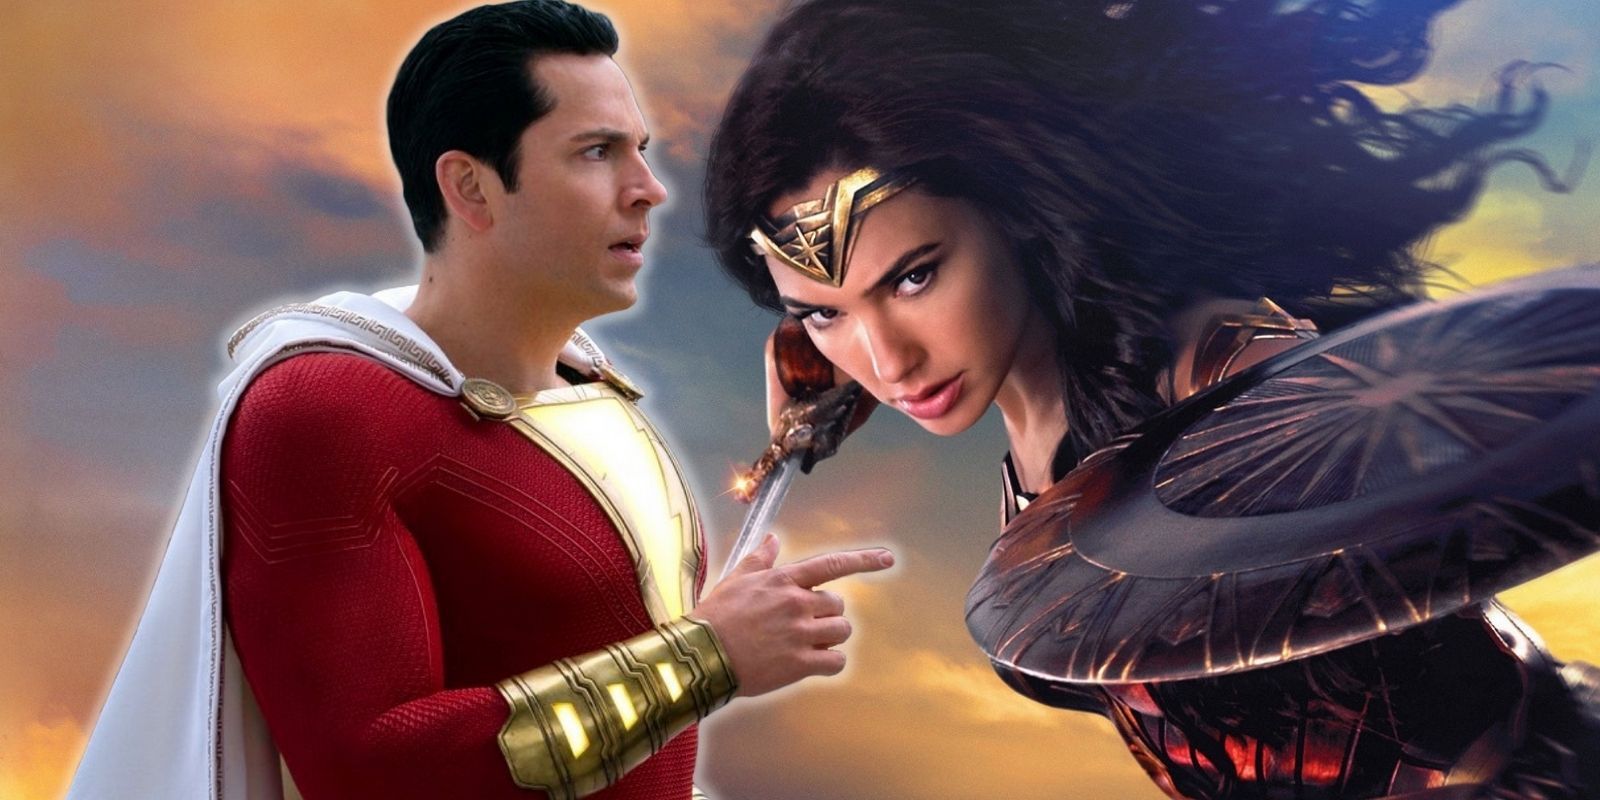 Shazam Updates on X: Gal Gadot as Wonder Woman behind the scenes